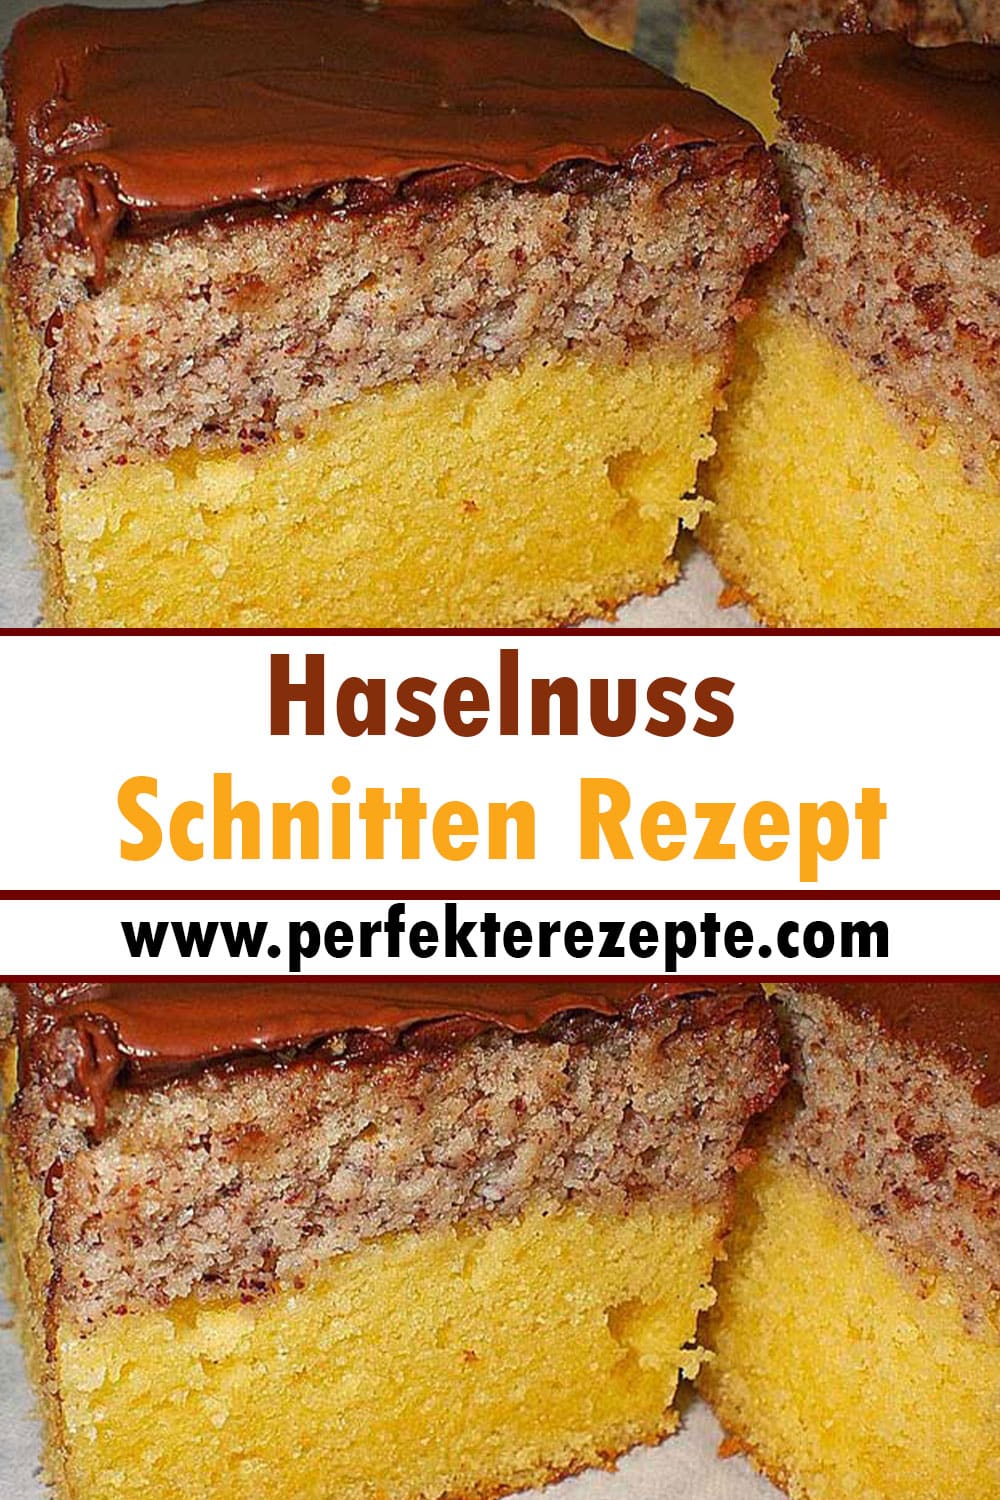 Haselnuss-Schnitten Rezept